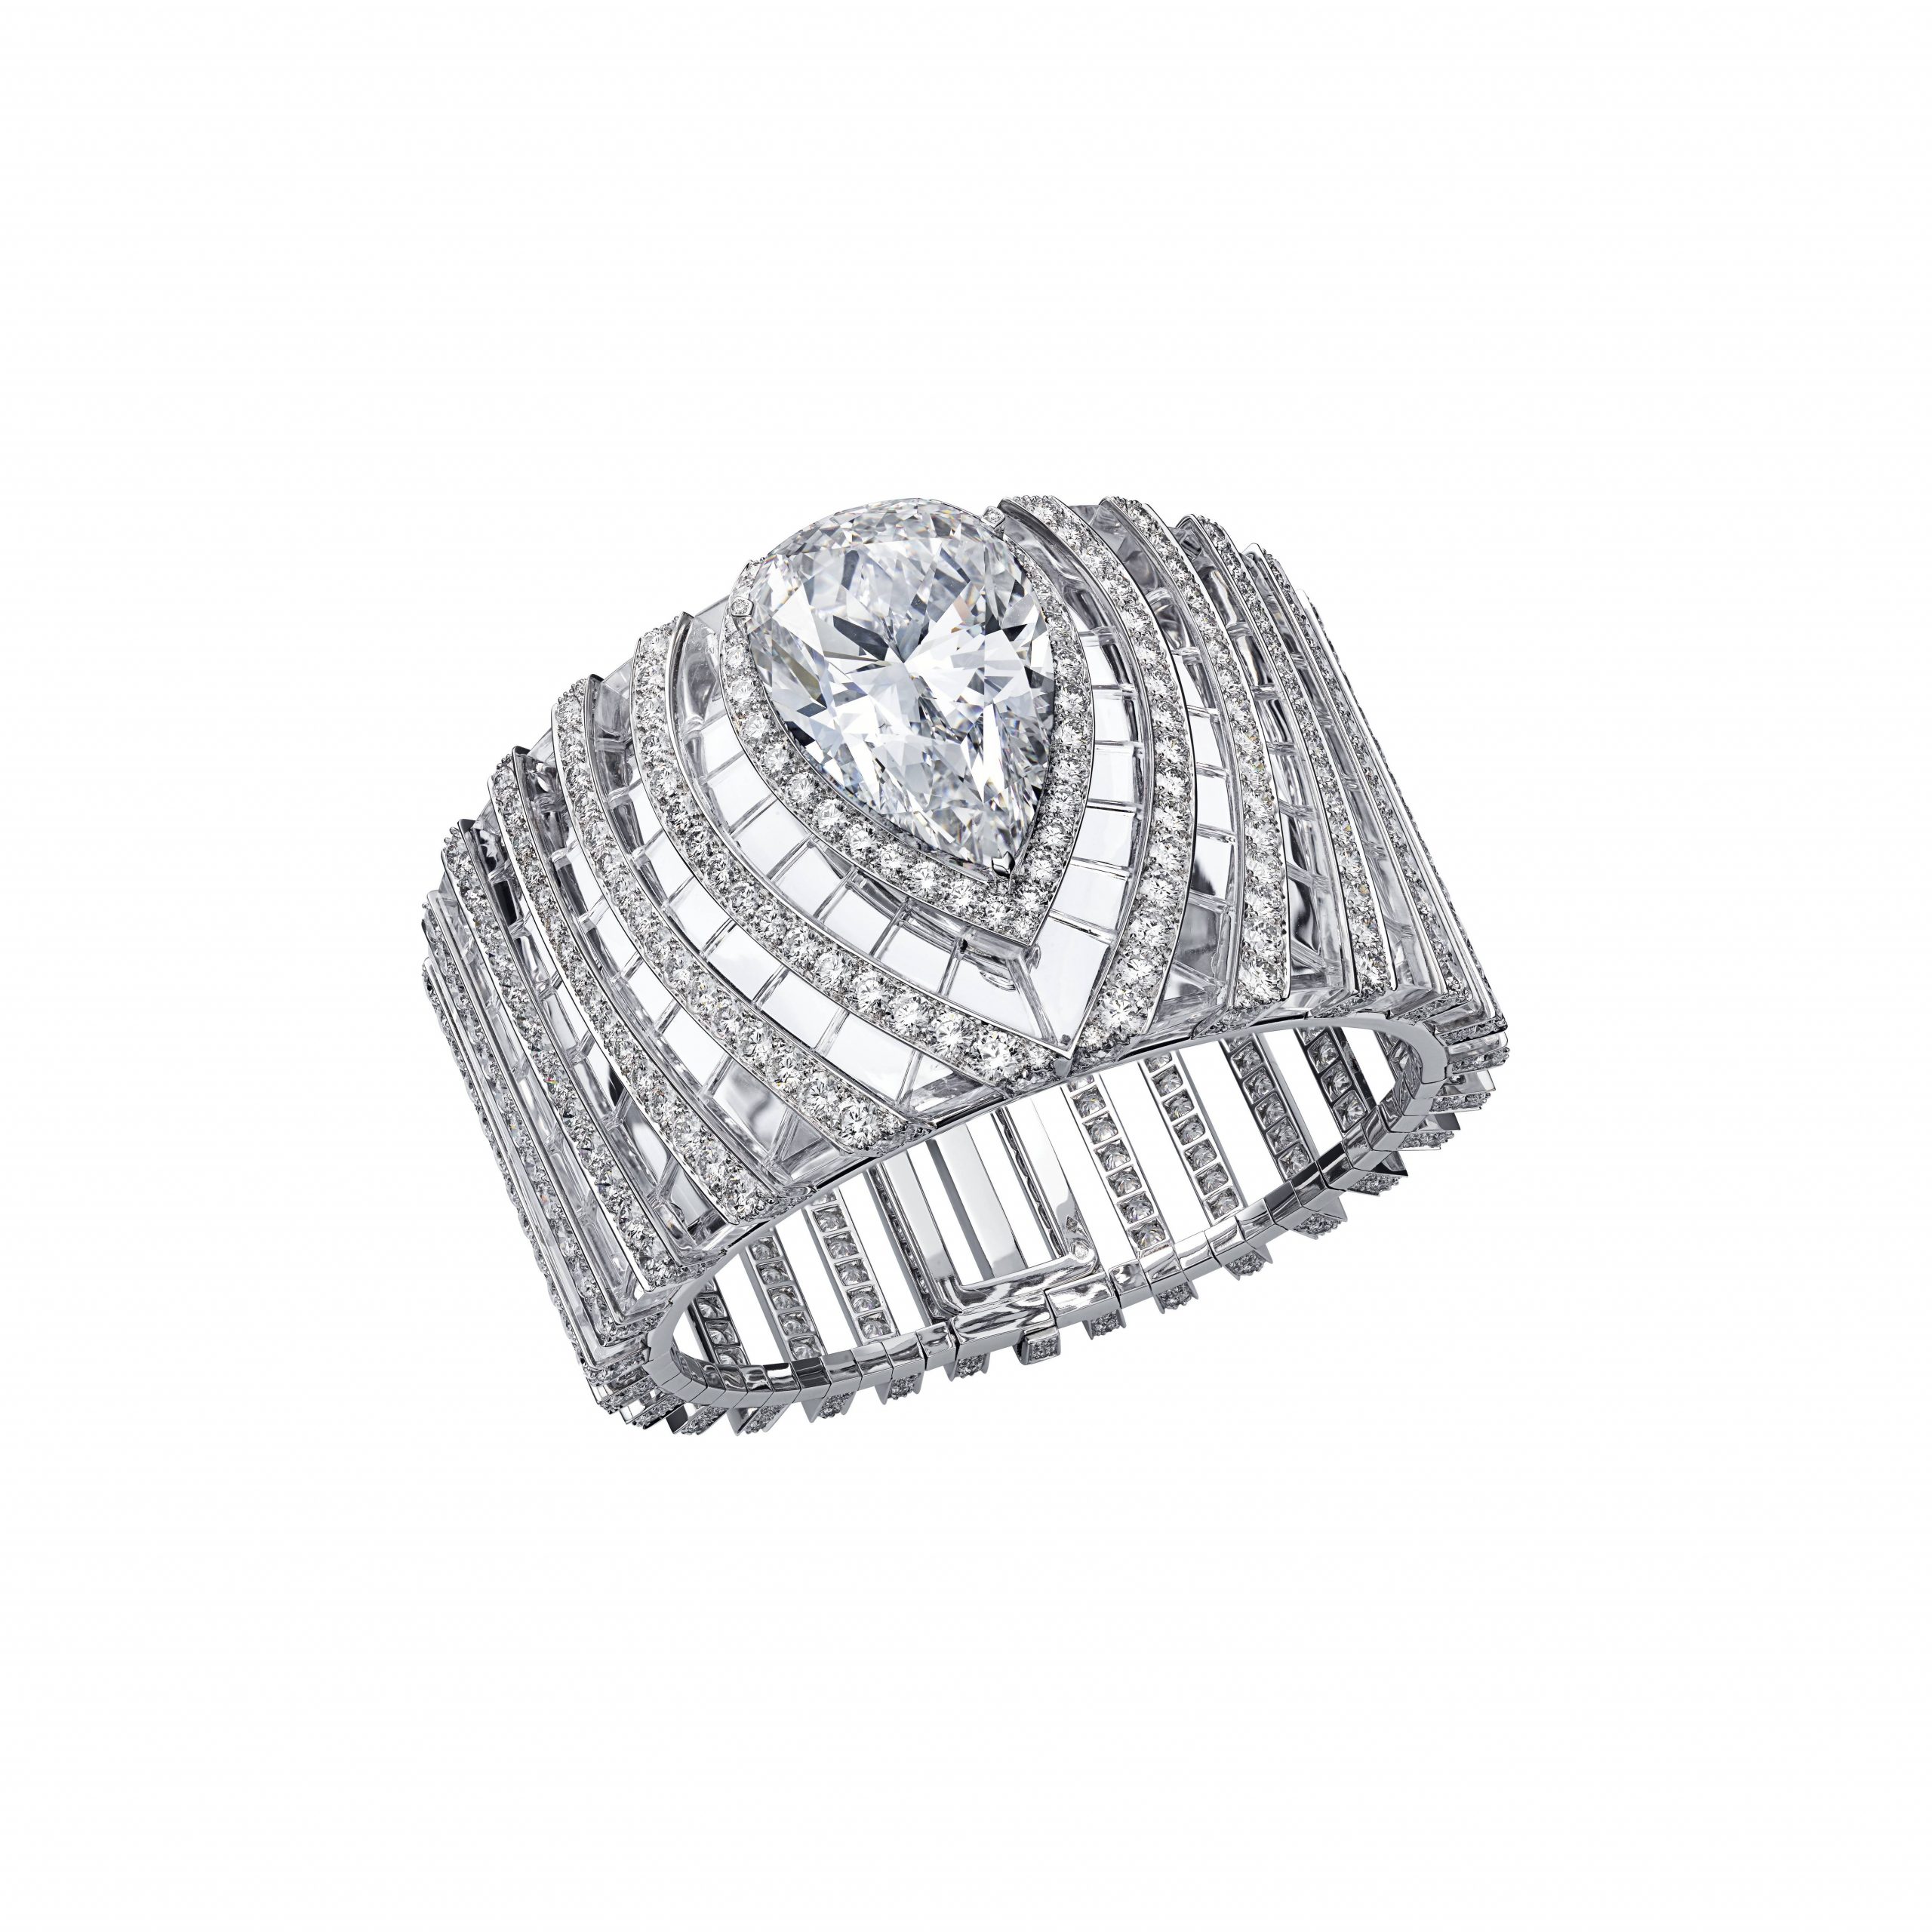 High Jewelry bracelet, Collection L'Odyssée de Cartier, white gold, one 63.66 carat pear-shaped D IF diamond, rock crystal, brilliants